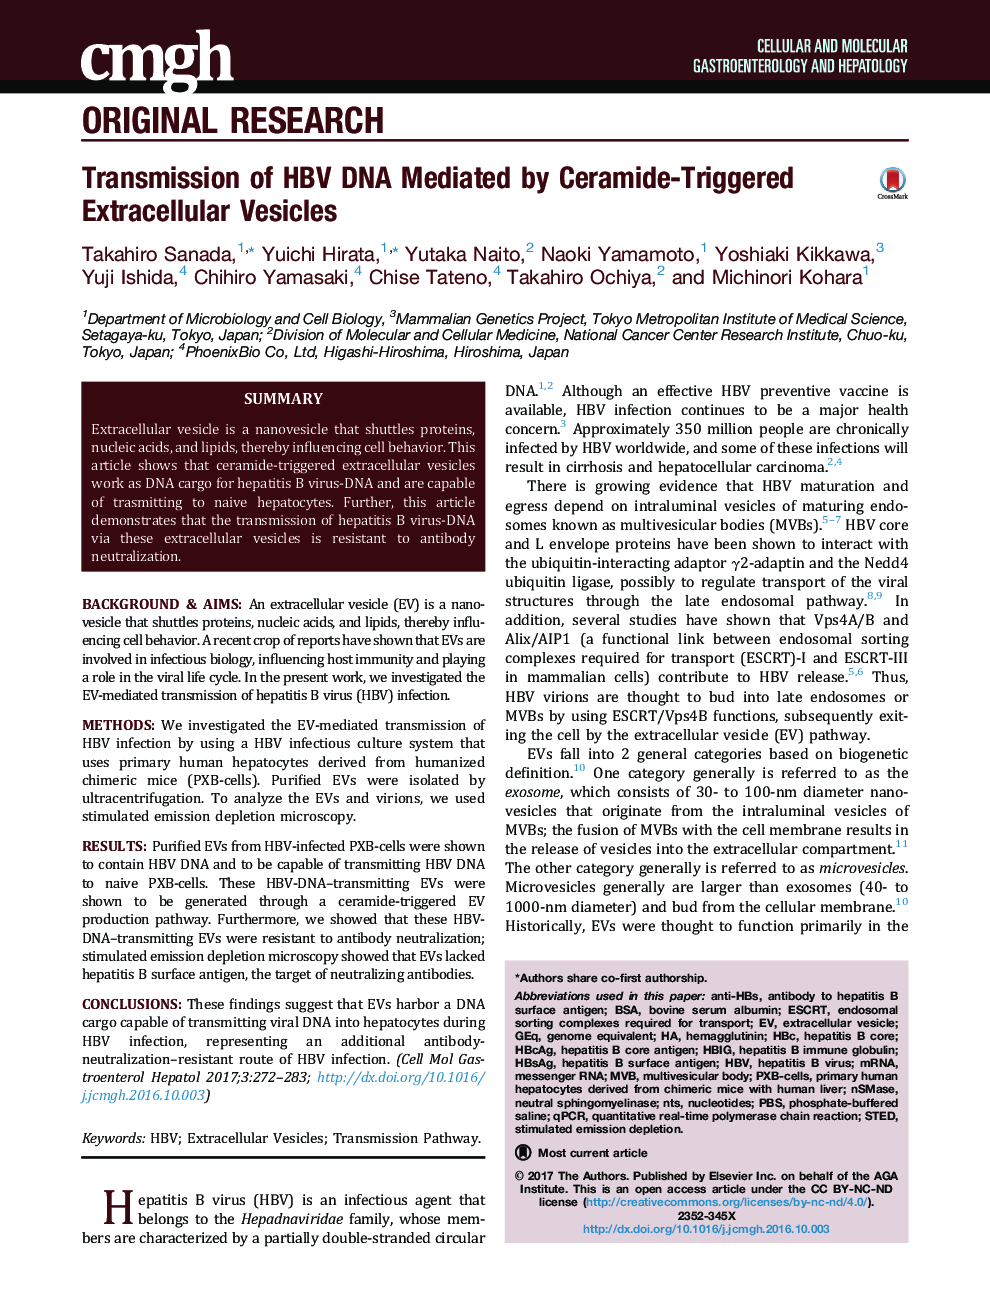 Transmission of HBV DNA Mediated by Ceramide-Triggered Extracellular Vesicles